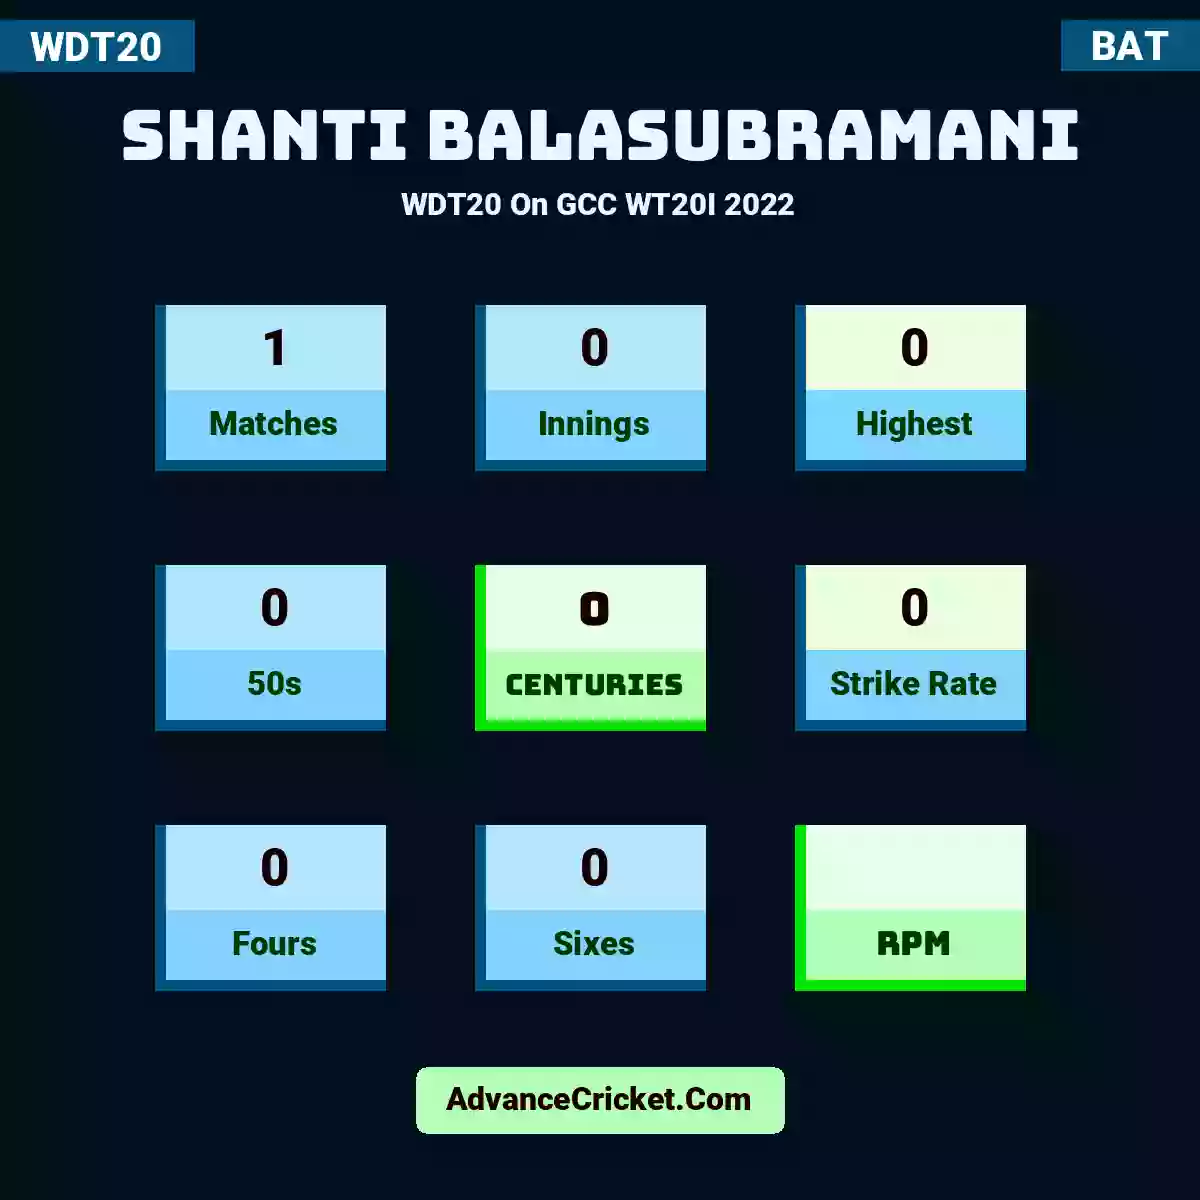 Shanti Balasubramani WDT20  On GCC WT20I 2022, Shanti Balasubramani played 1 matches, scored 0 runs as highest, 0 half-centuries, and 0 centuries, with a strike rate of 0. S.Balasubramani hit 0 fours and 0 sixes.